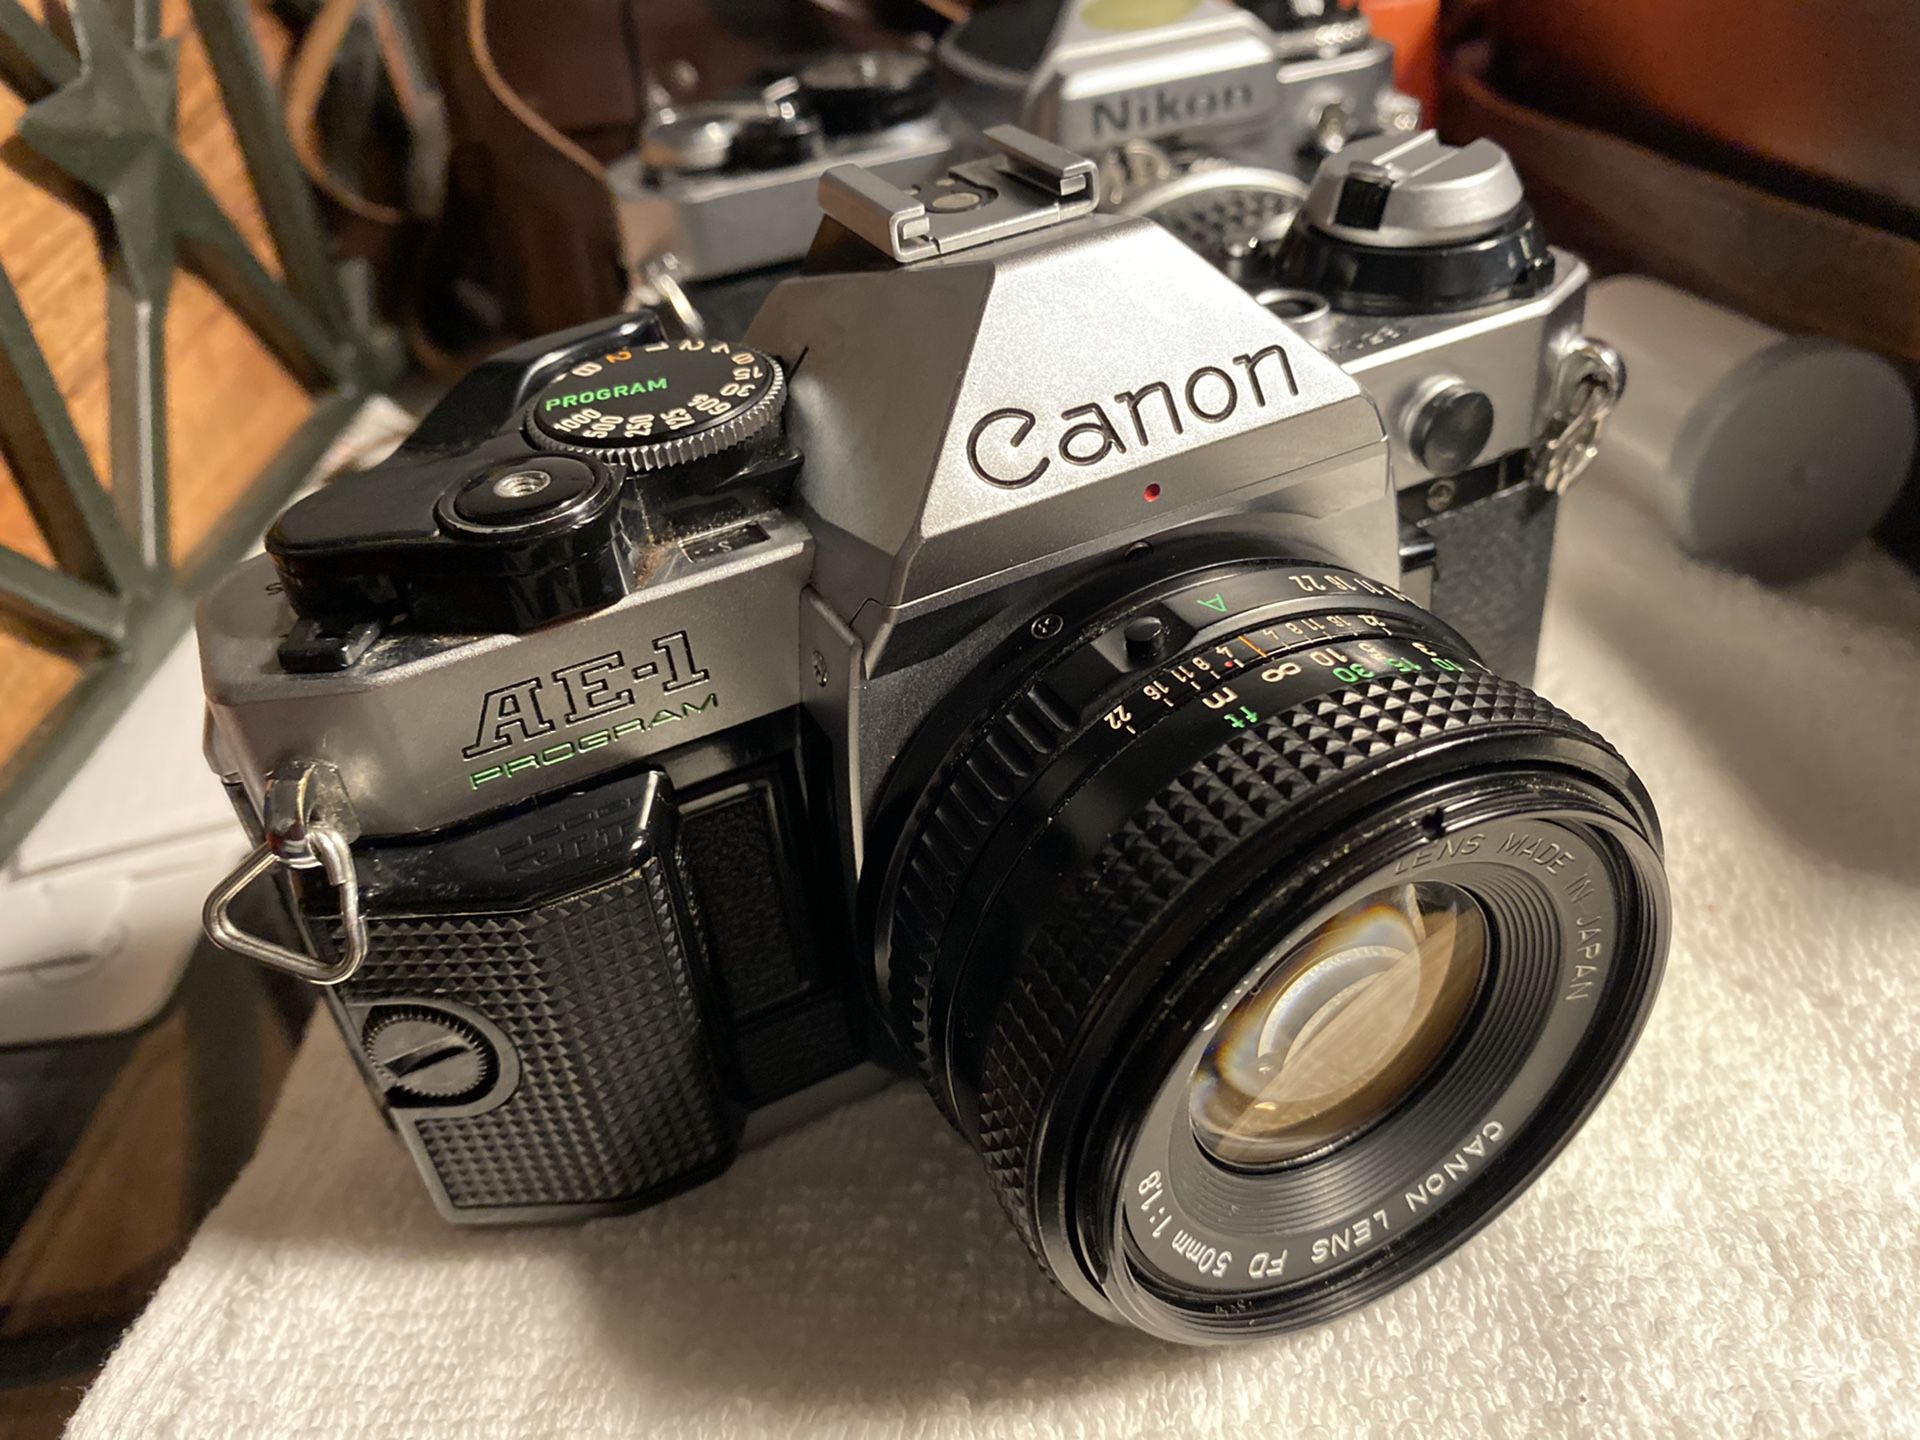 Canon AE1 Program 35 mm slr film camera w canon 50mm f1.8 lens No Squeak Meter works good